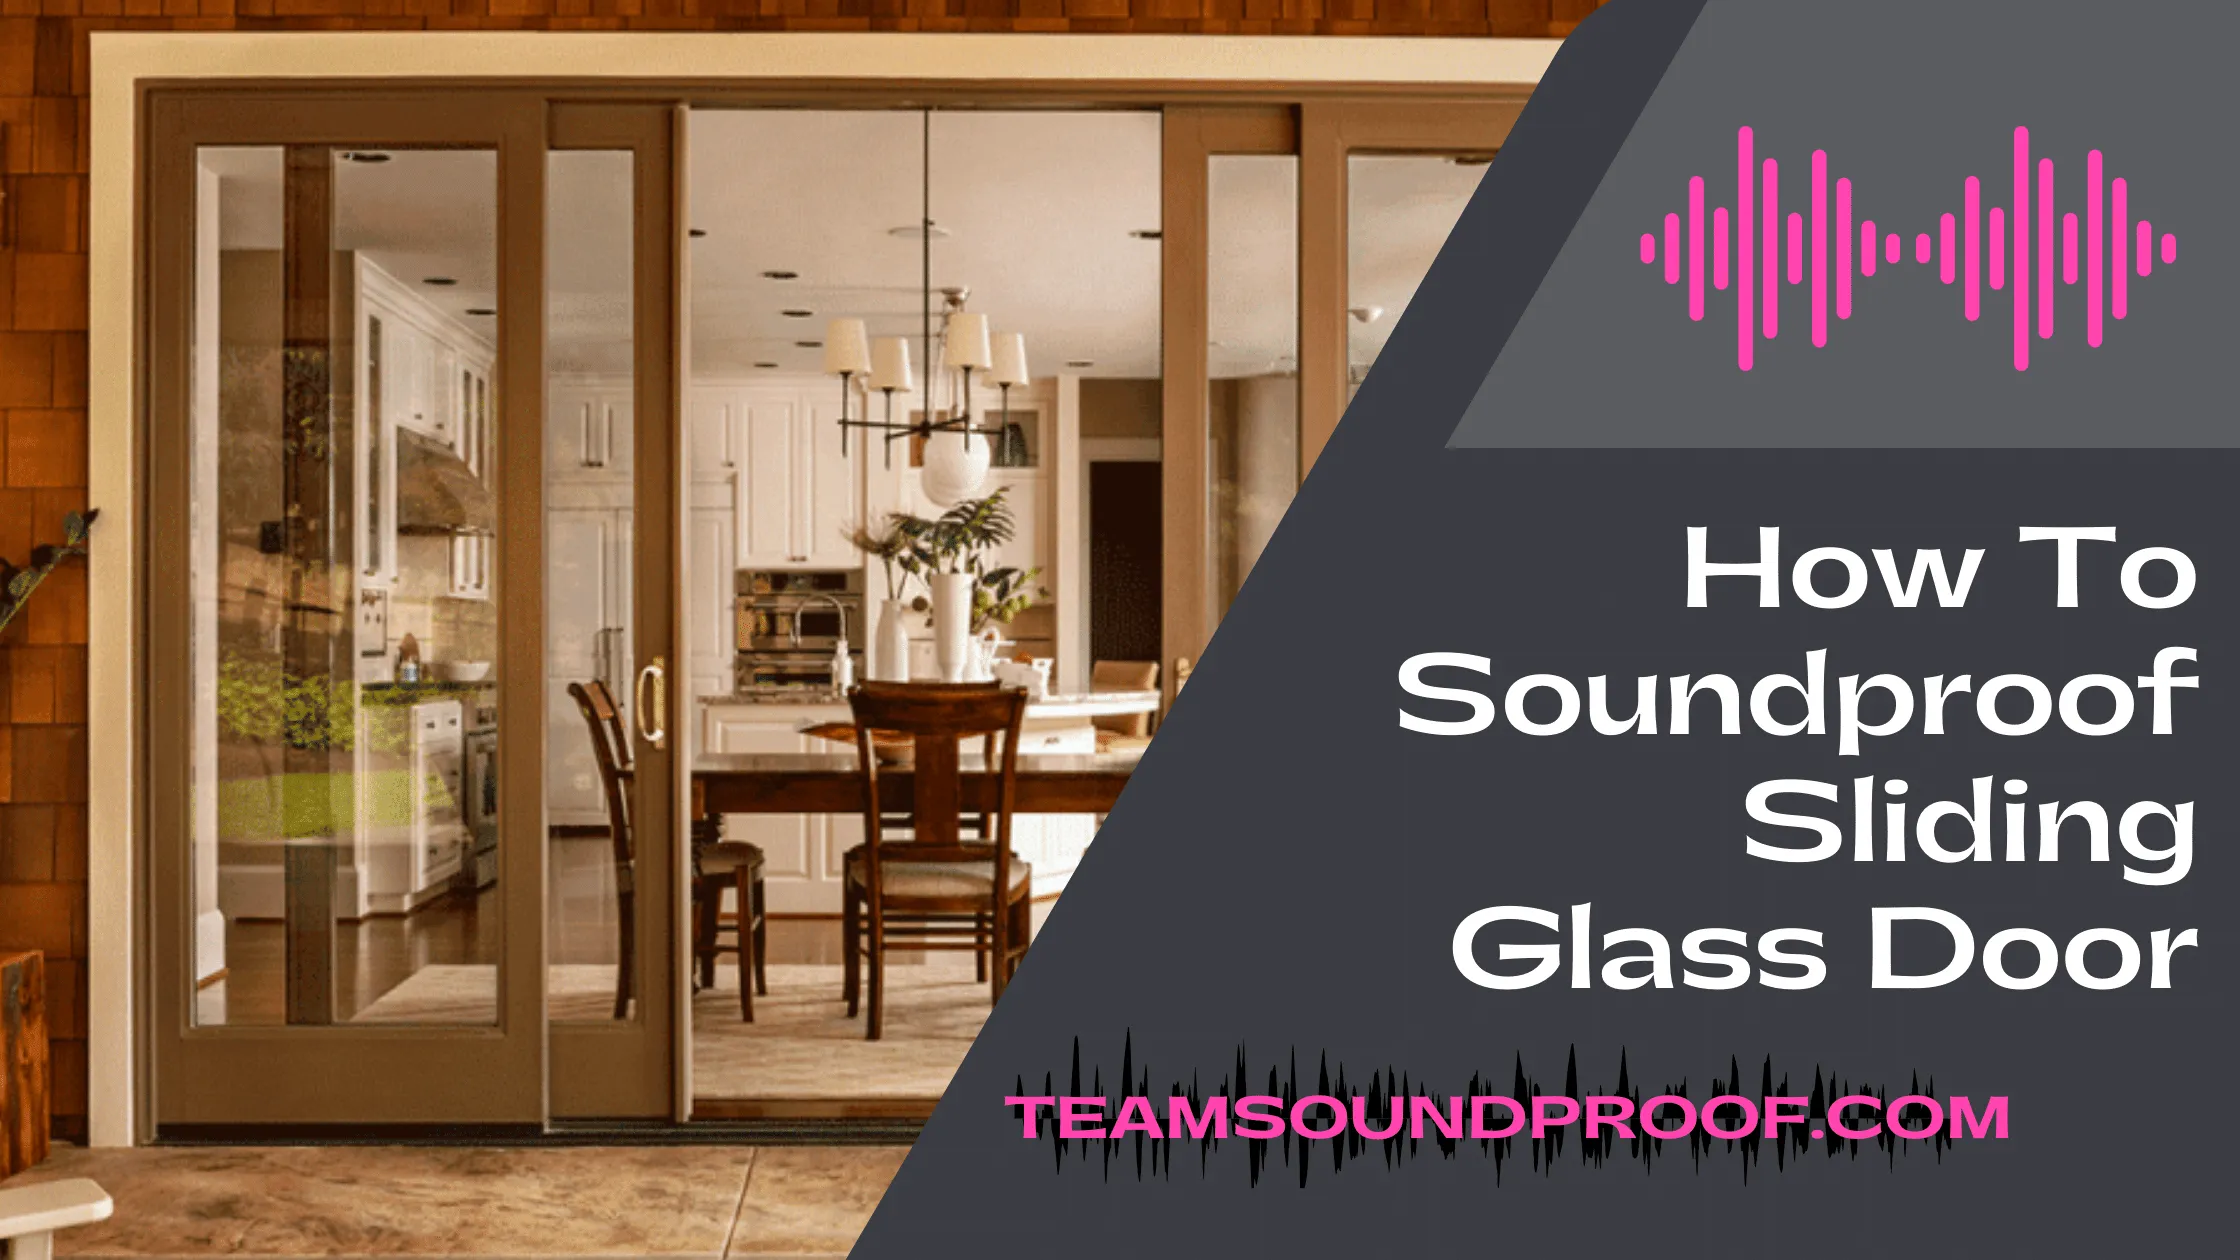 How To Soundproof Sliding Glass Door - Methods Explained!